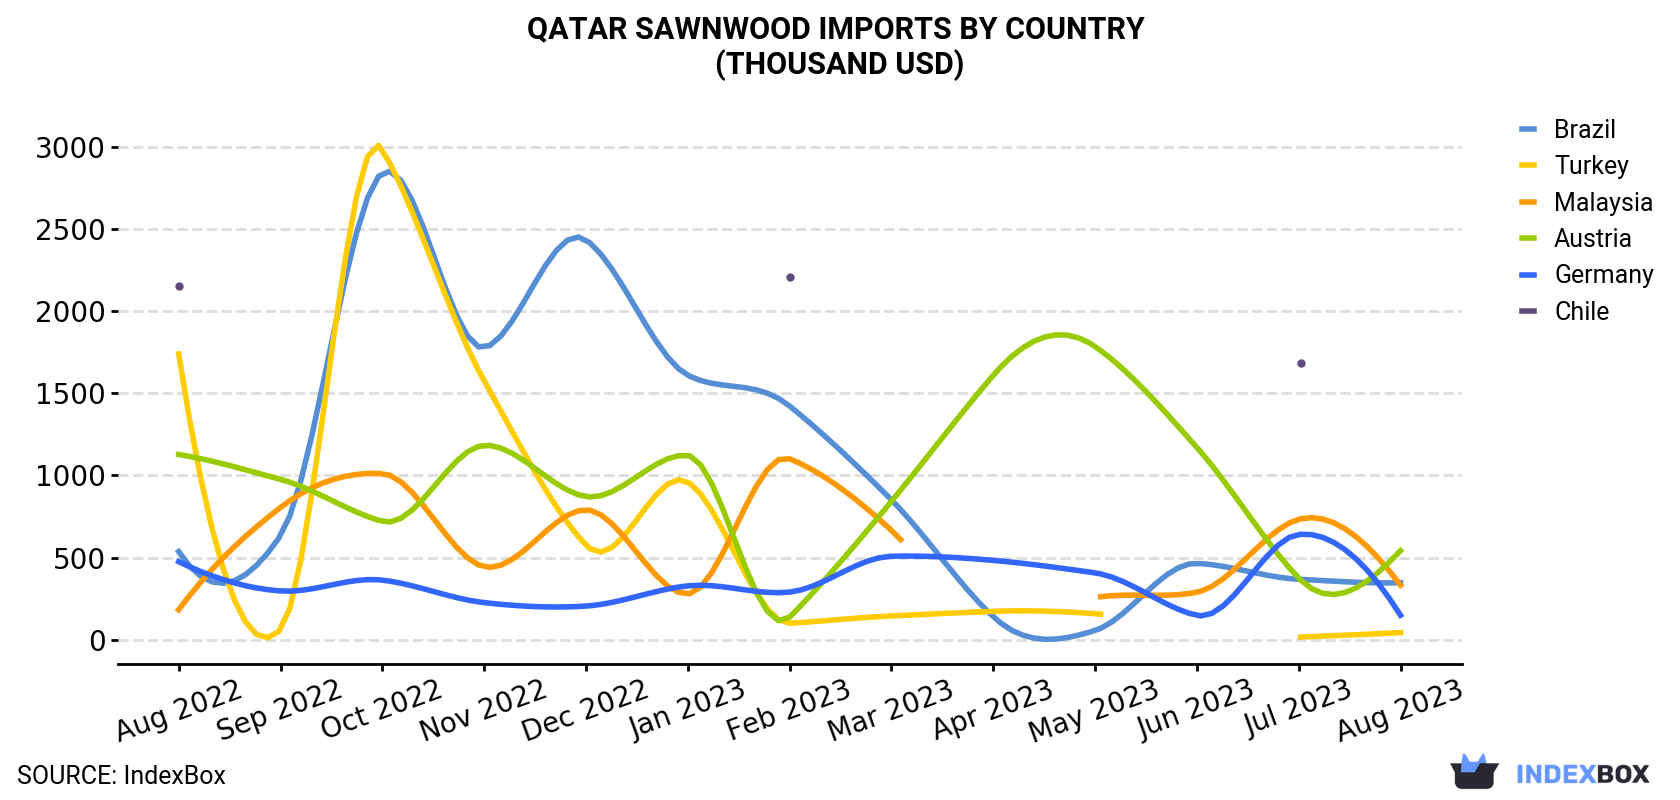 Qatar Sawnwood Imports By Country (Thousand USD)